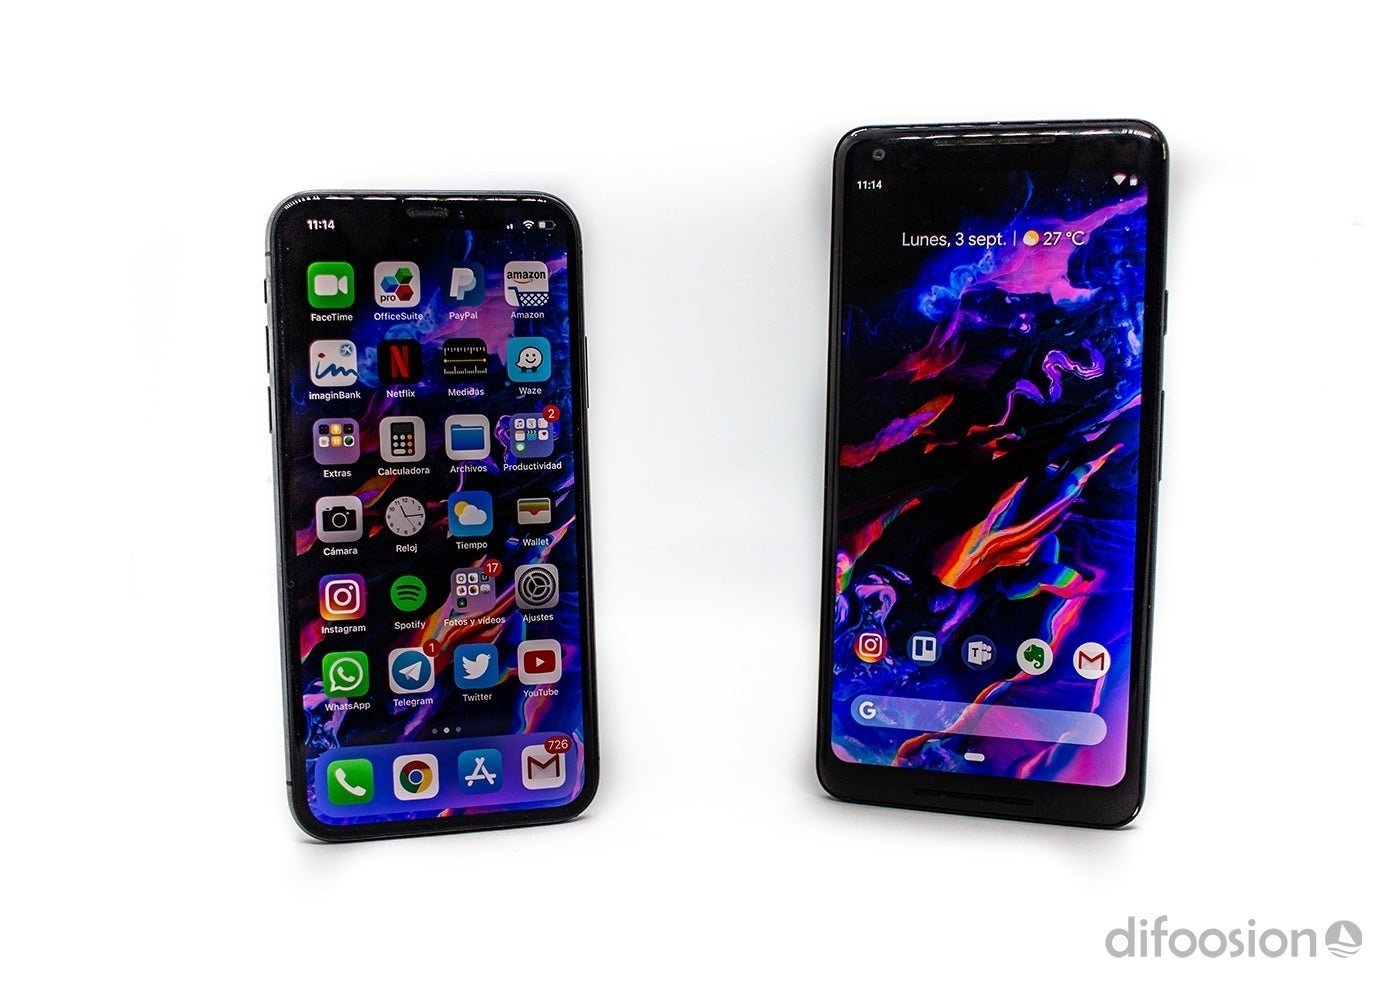 Pixel vs iPhone